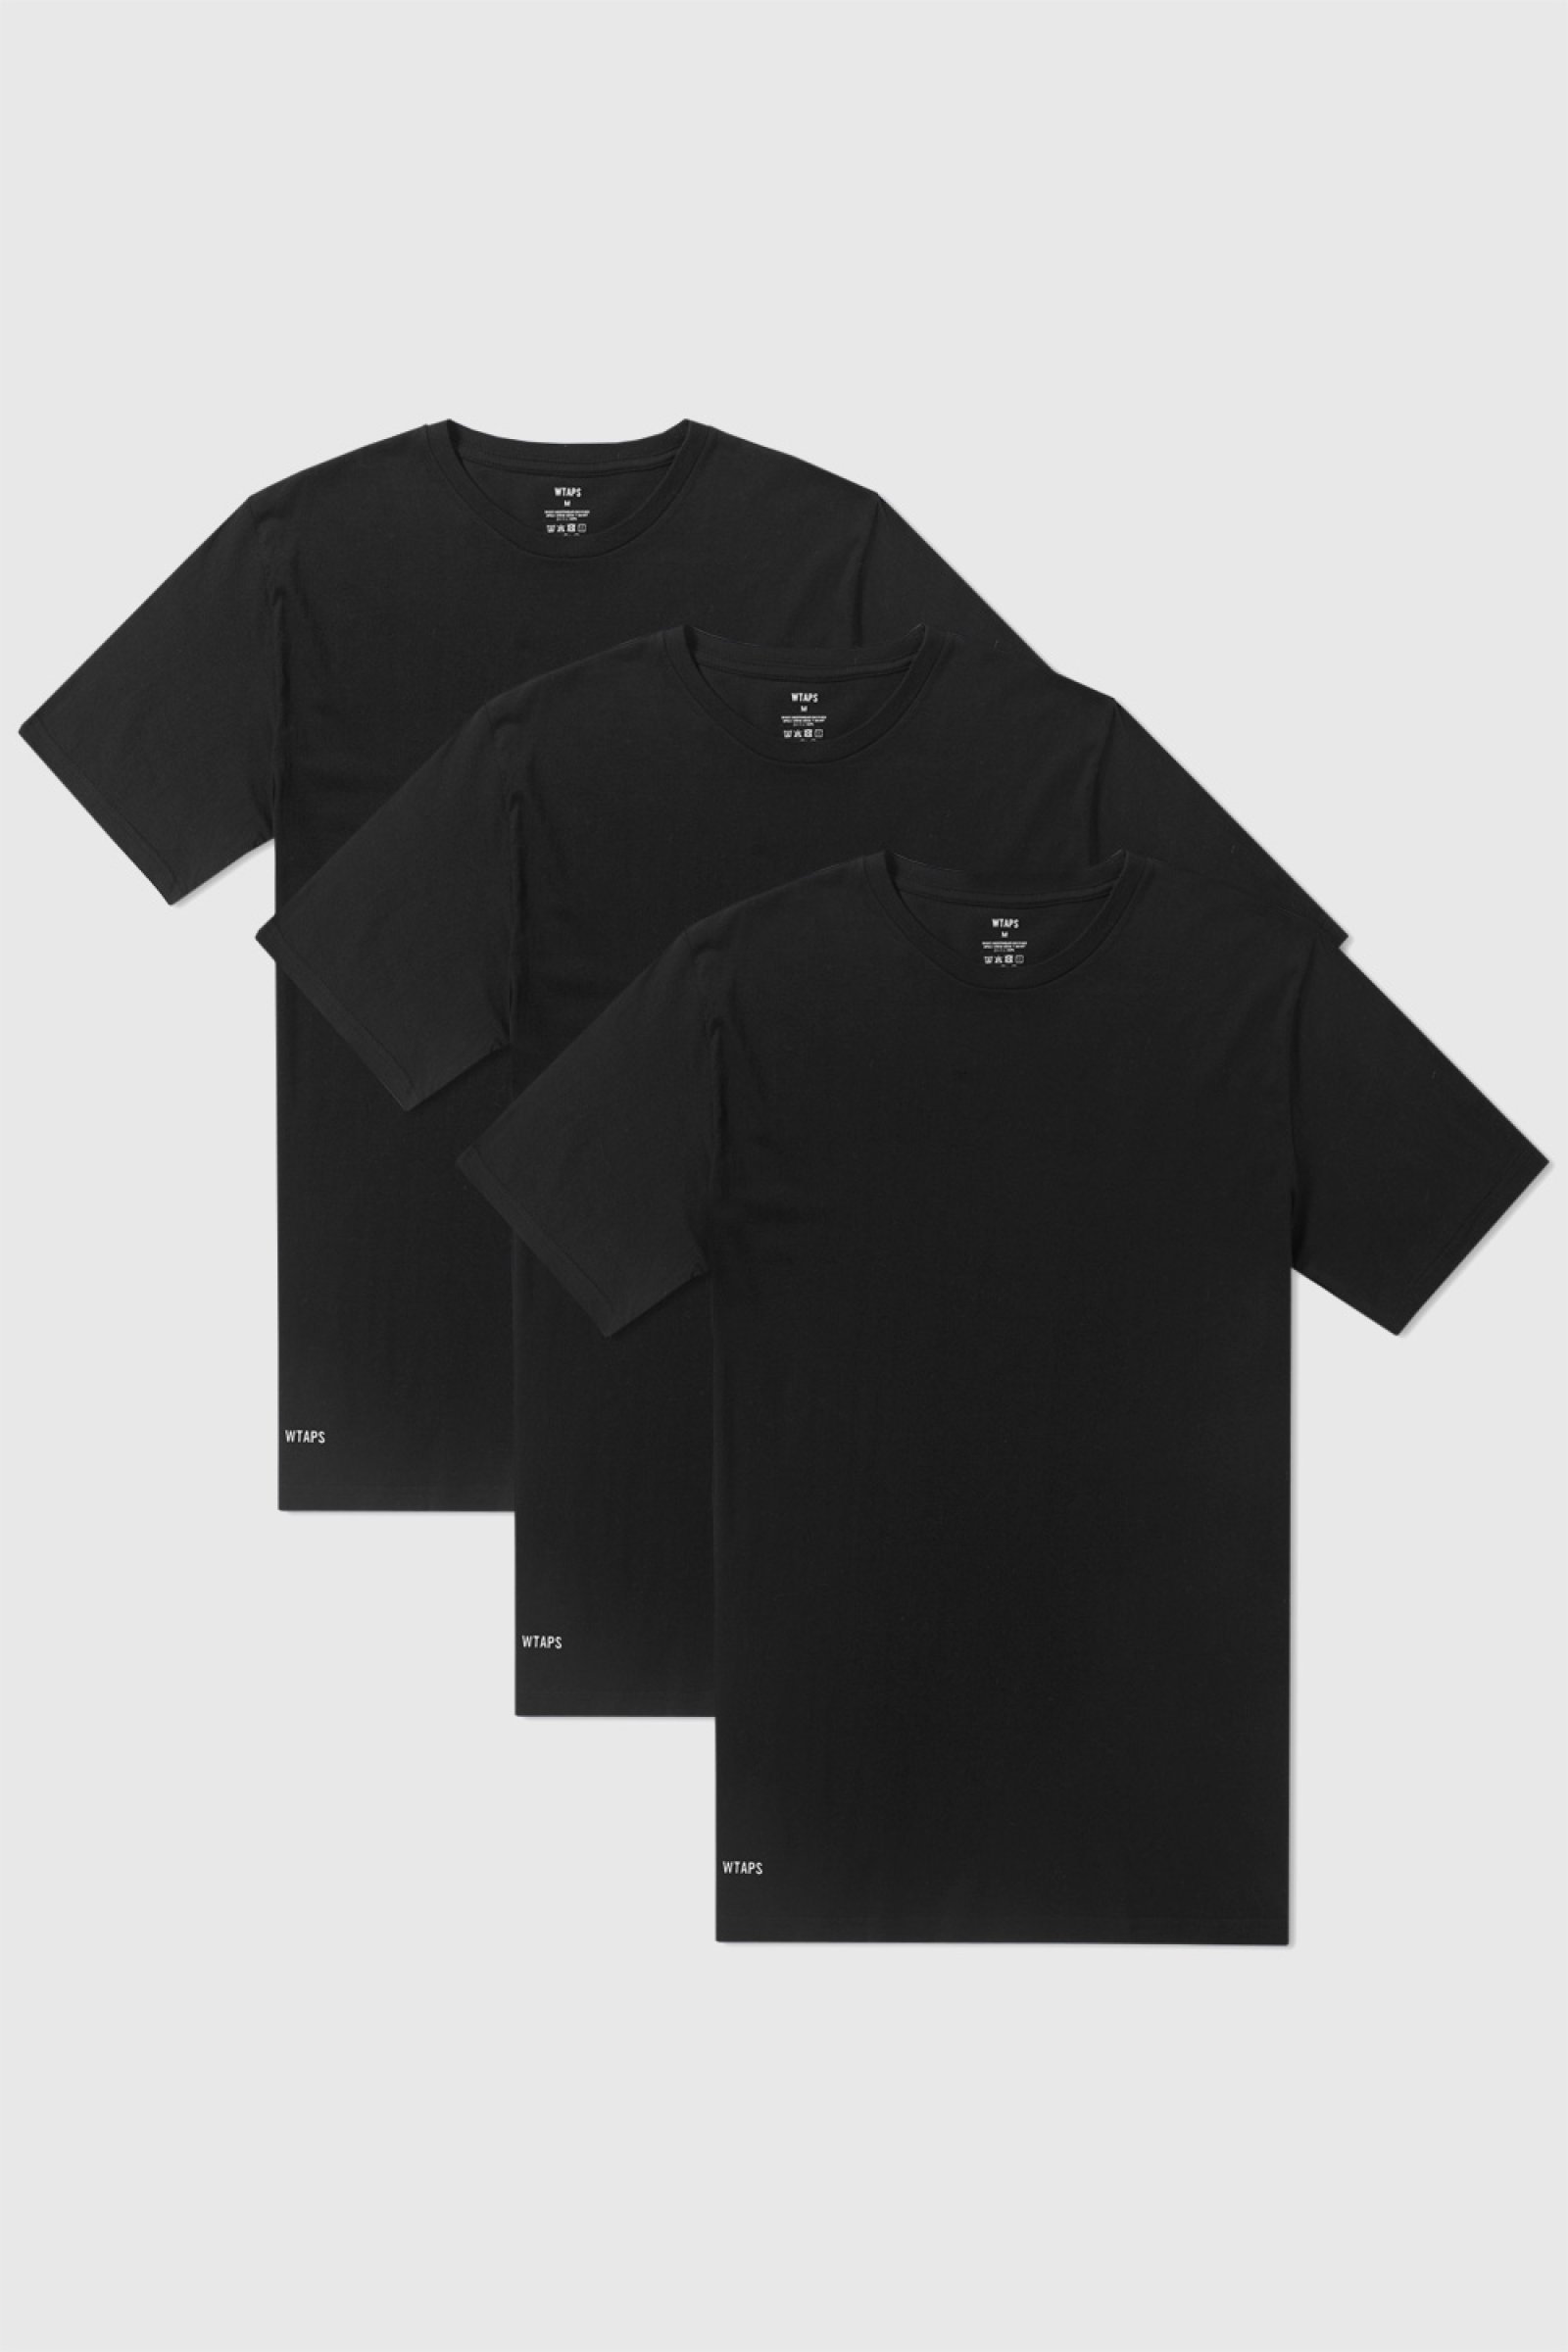 WTAPS Skivvies T-shirt Black | WoodWood.com